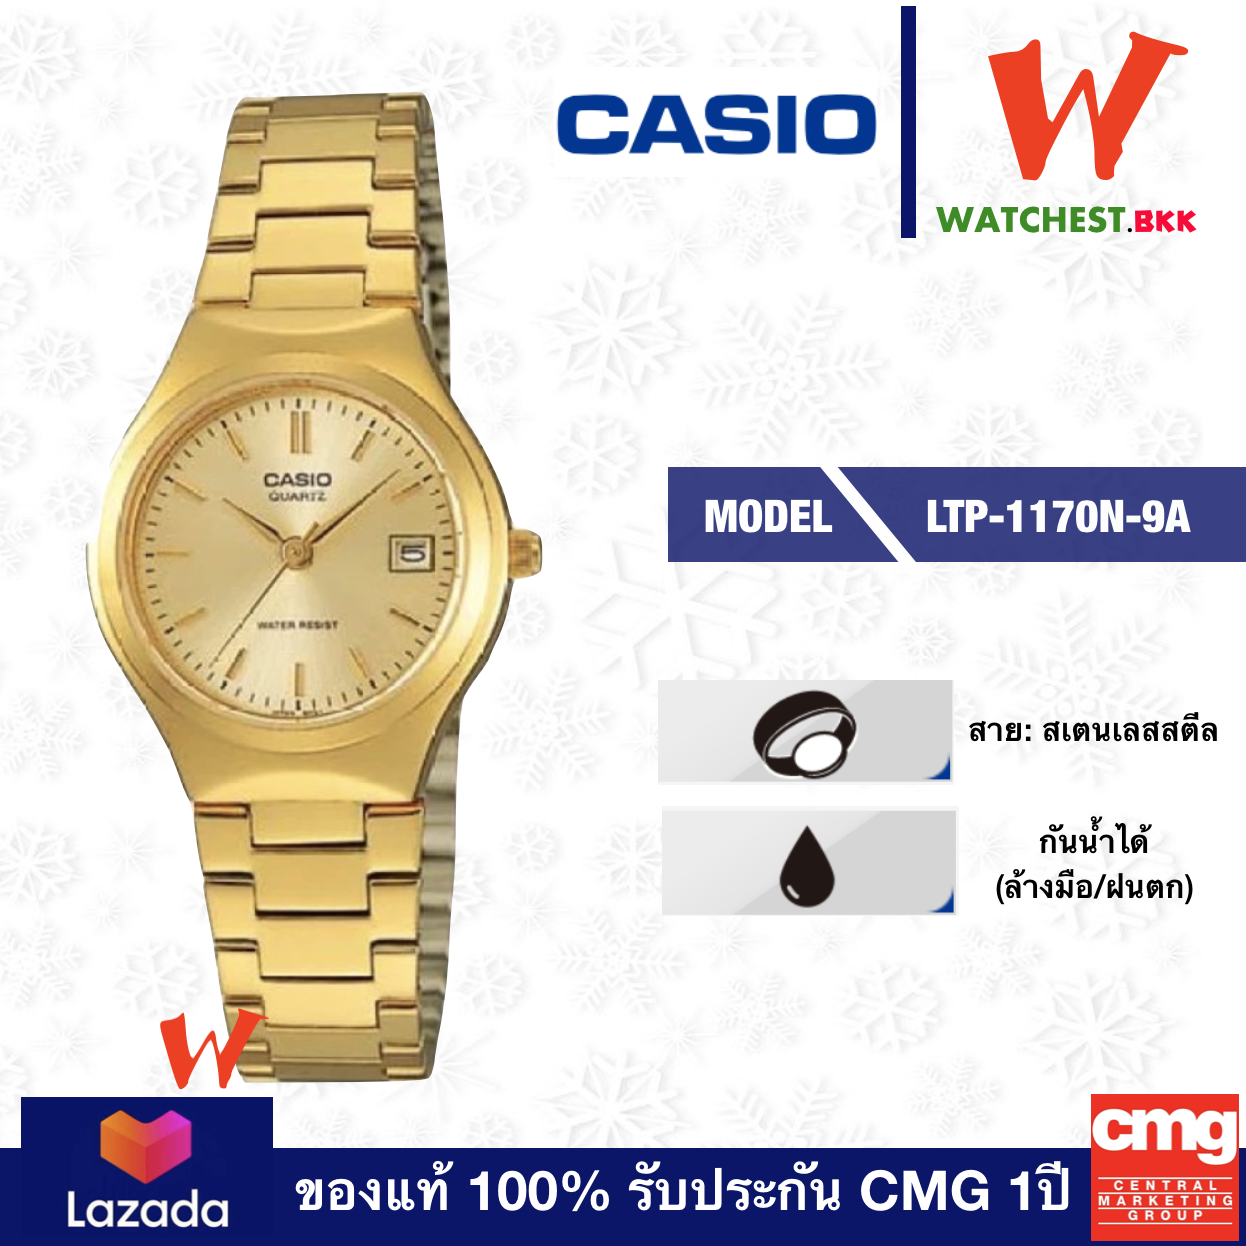 casio นาฬิกาข้อมือผู้หญิง สายสเตนเลสทอง รุ่น LTP-1170N-9A, คาสิโอ้ สายเหล็ก สีทอง ตัวล็อกบานพับ (watchestbkk คาสิโอ แท้ ของแท้100% ประกัน CMG)